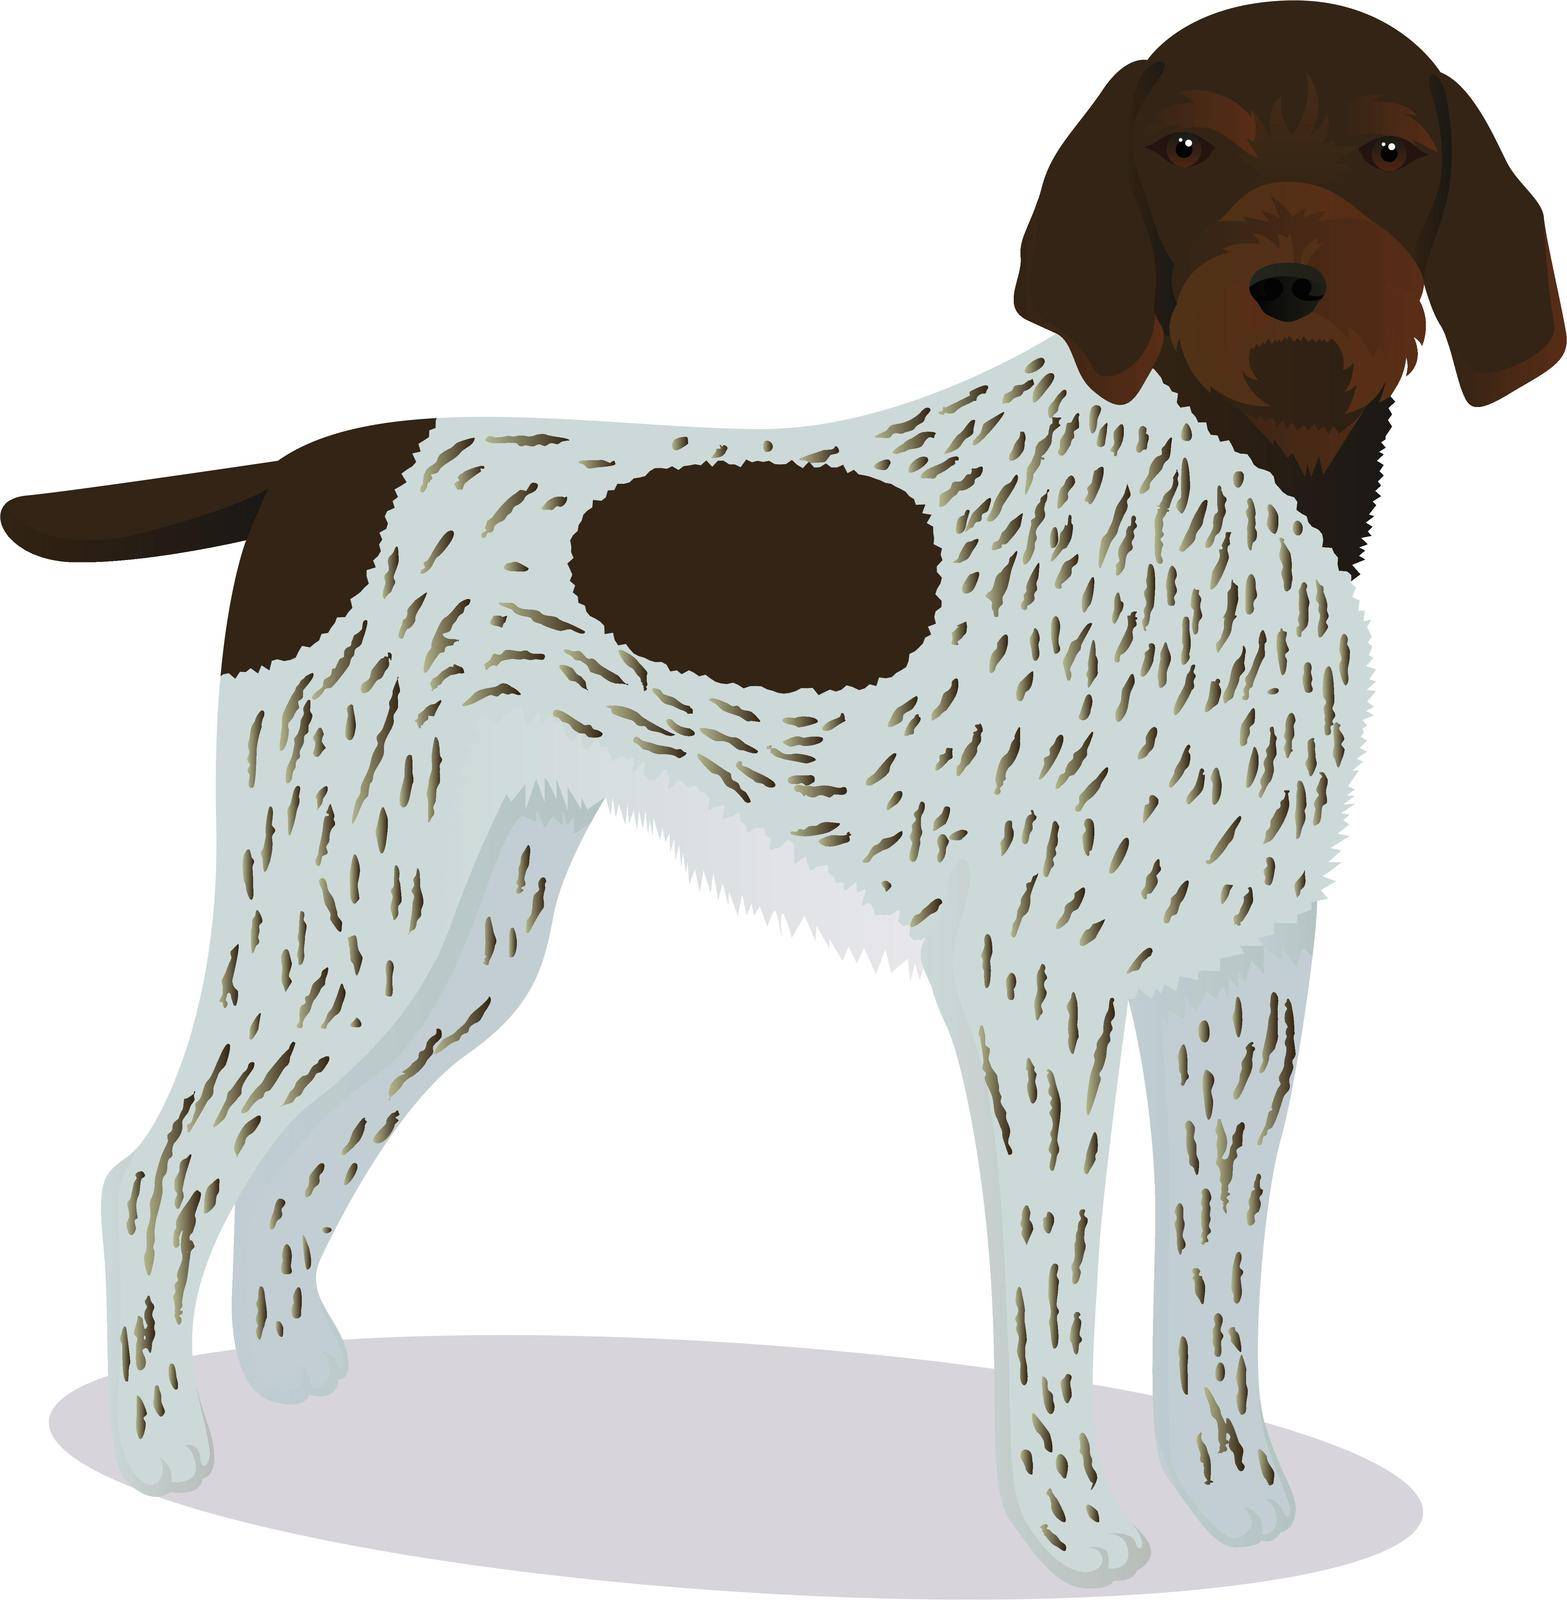 Drachhaar dog vector illustration